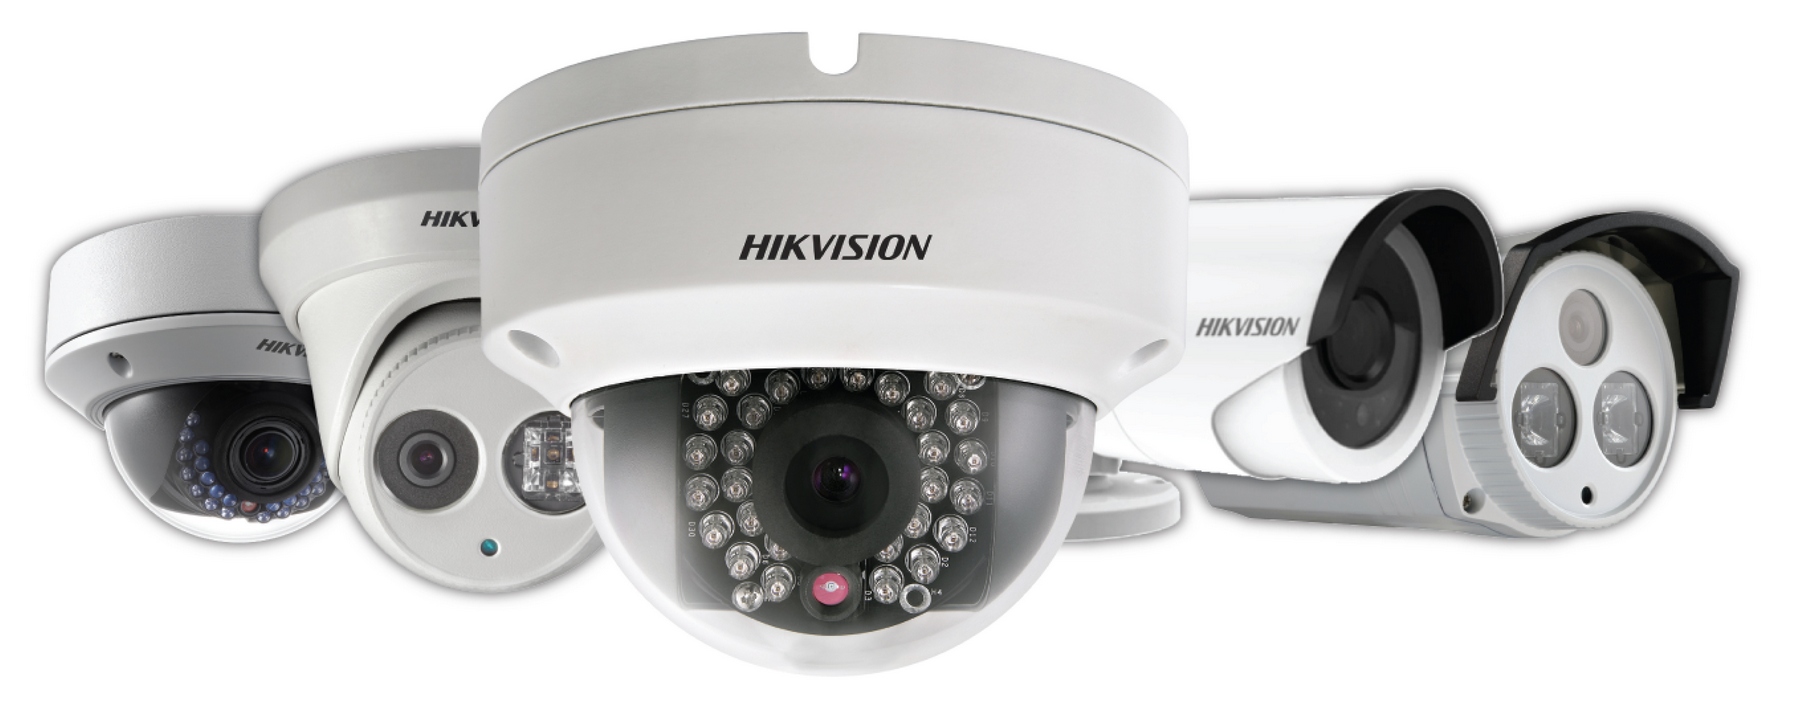 HIKVISION CCTV CAMERA DS 2CE